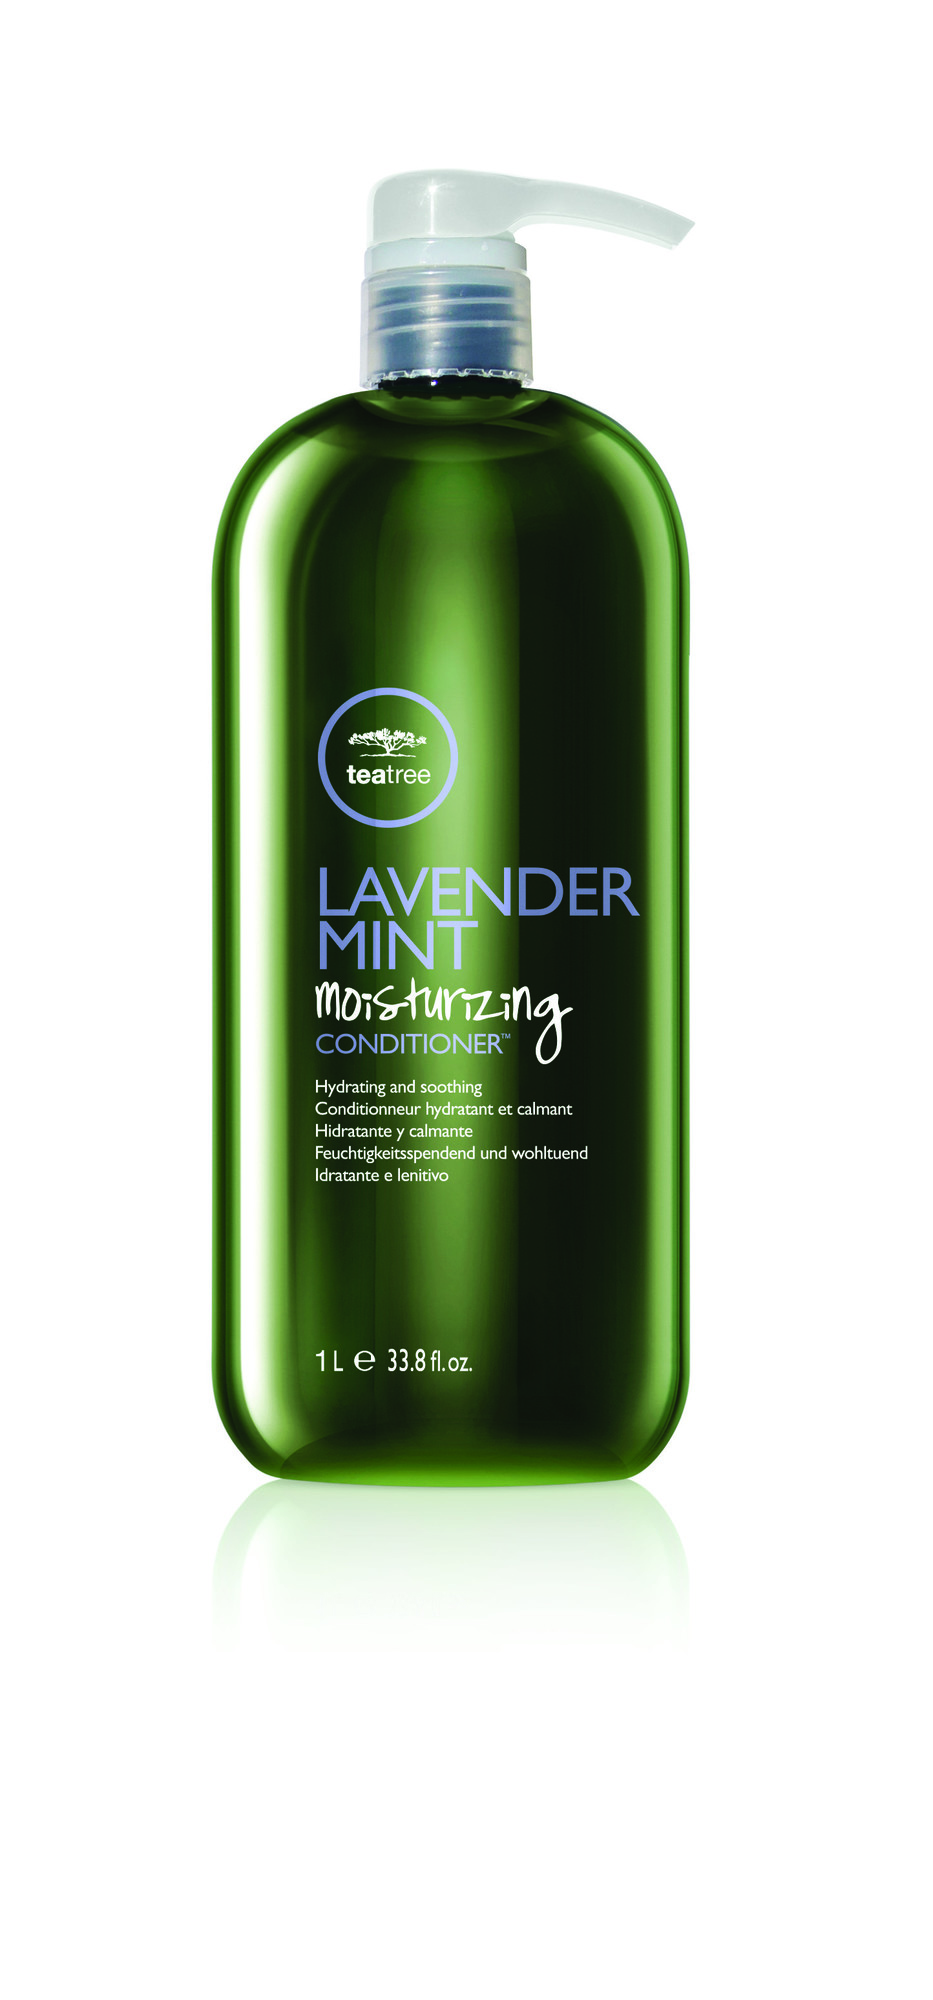 Lavender Mint Moisturizing Conditioner™ obsah (ml): 1000ml